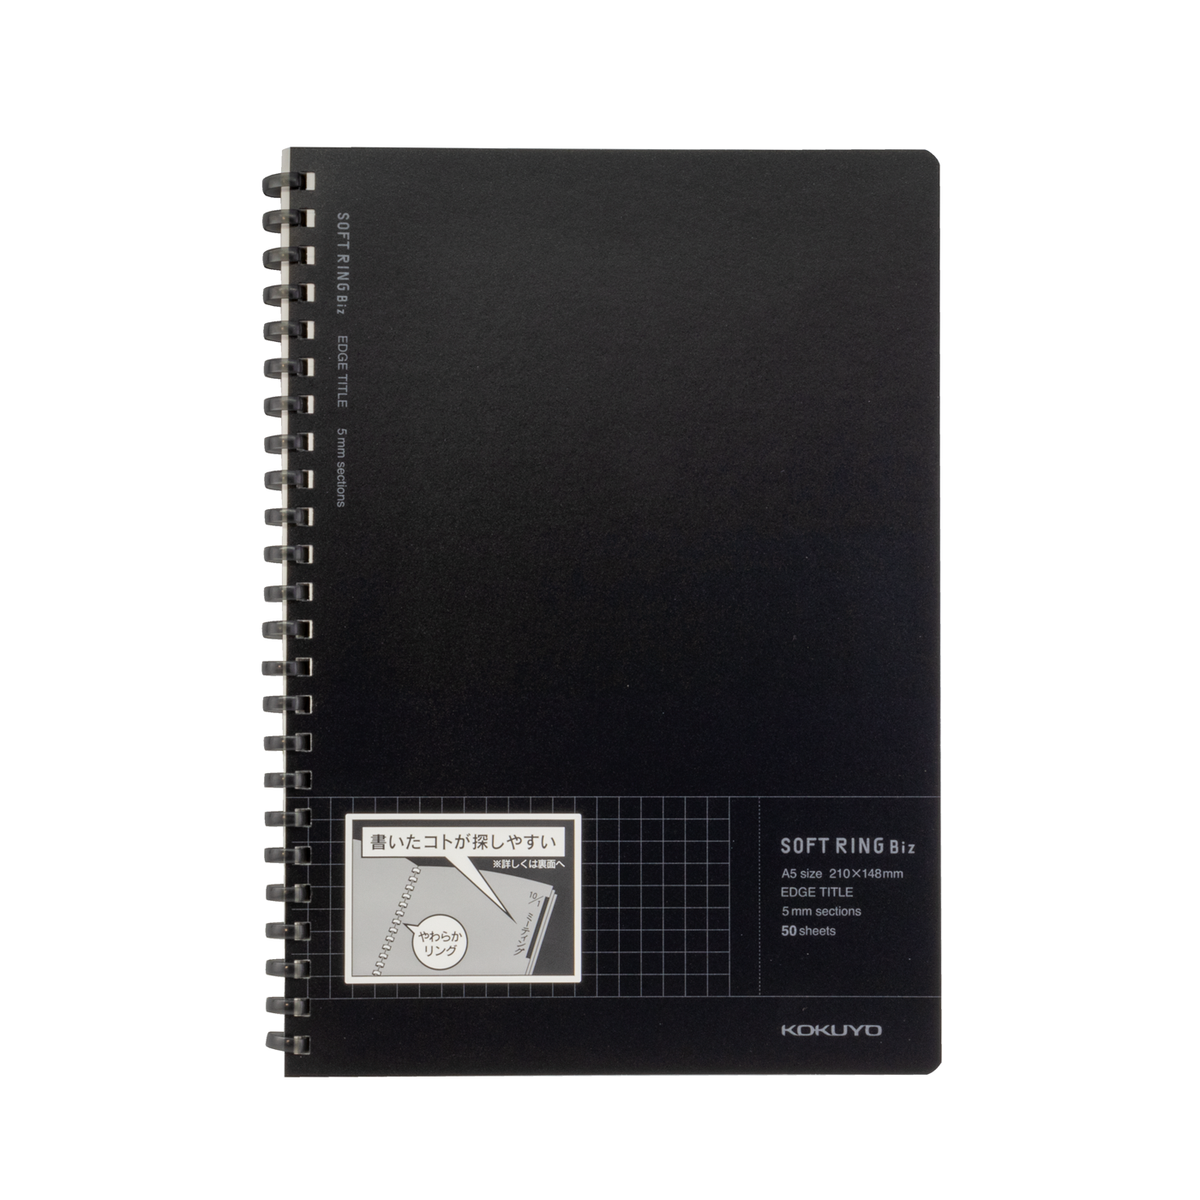 2 Kokuyo D Shaped Soft Ring Notebook, 5mm Grid Ruled, 70 Sheets, Semi-B5,  Black | eBay